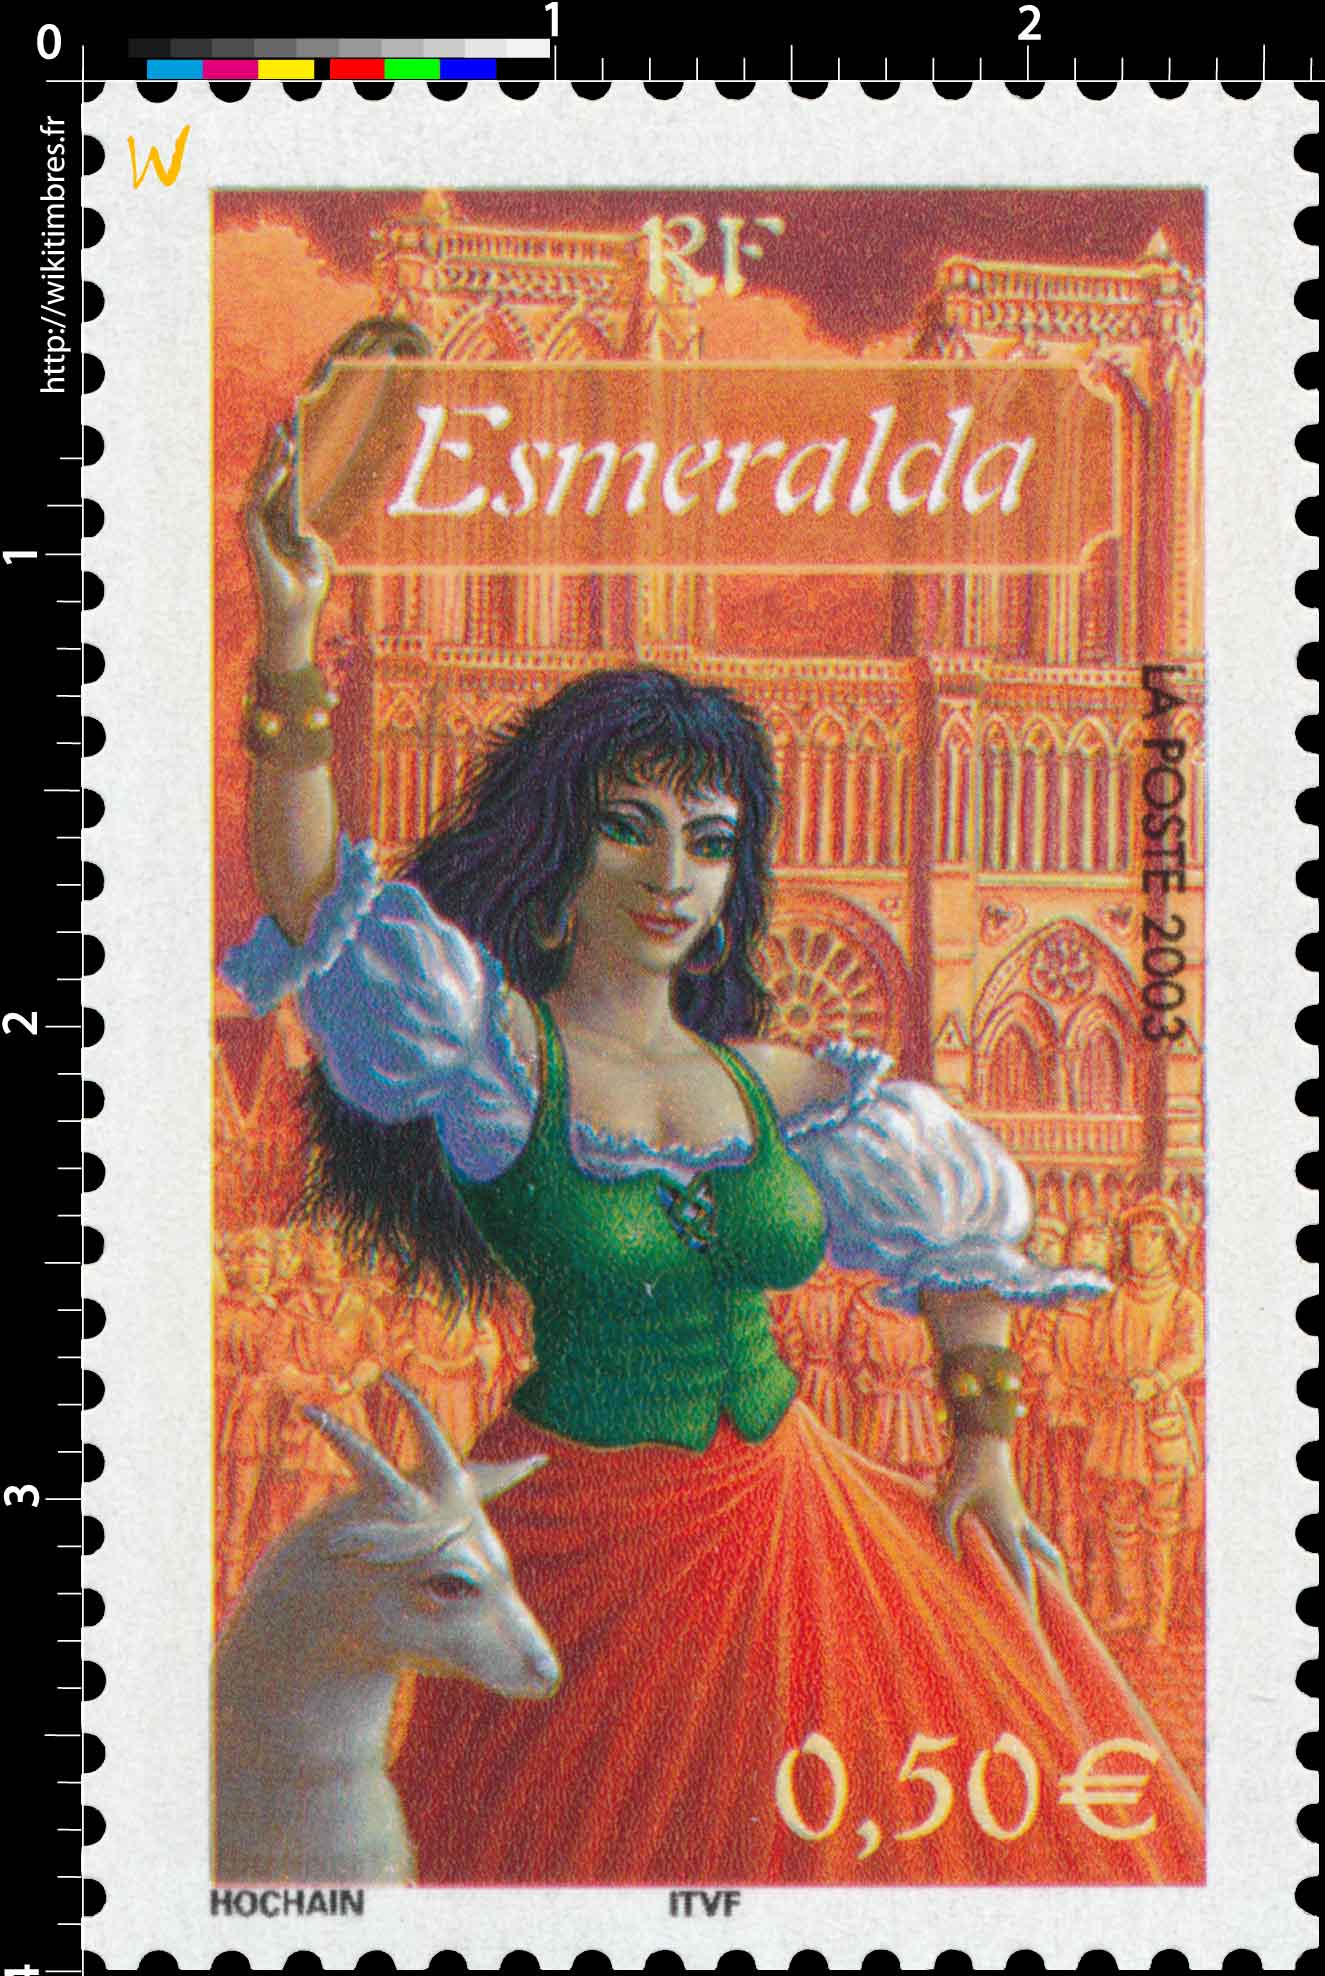 2003 Esméralda